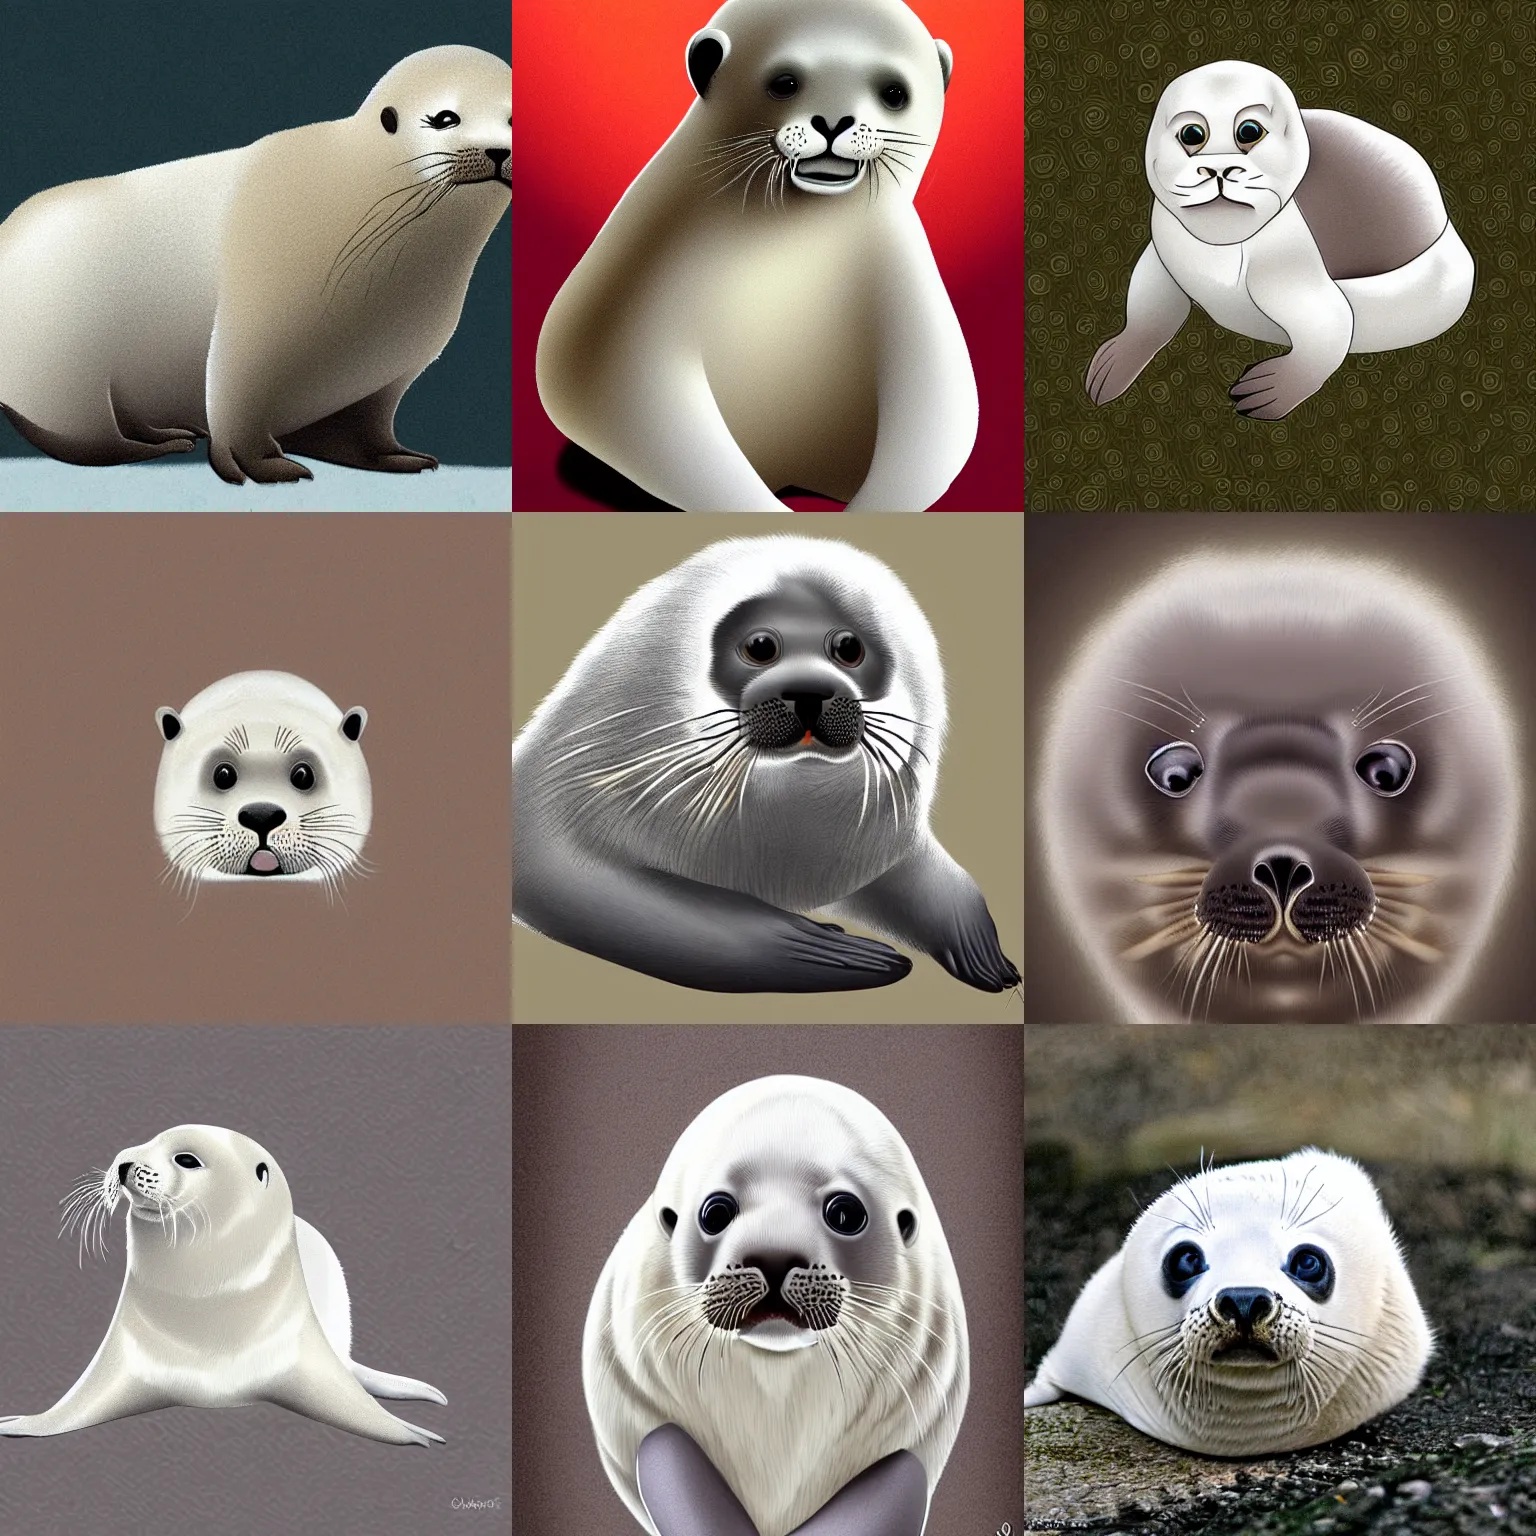 Prompt: seal beaver chimera, white fur, adorable, award-winning digital art